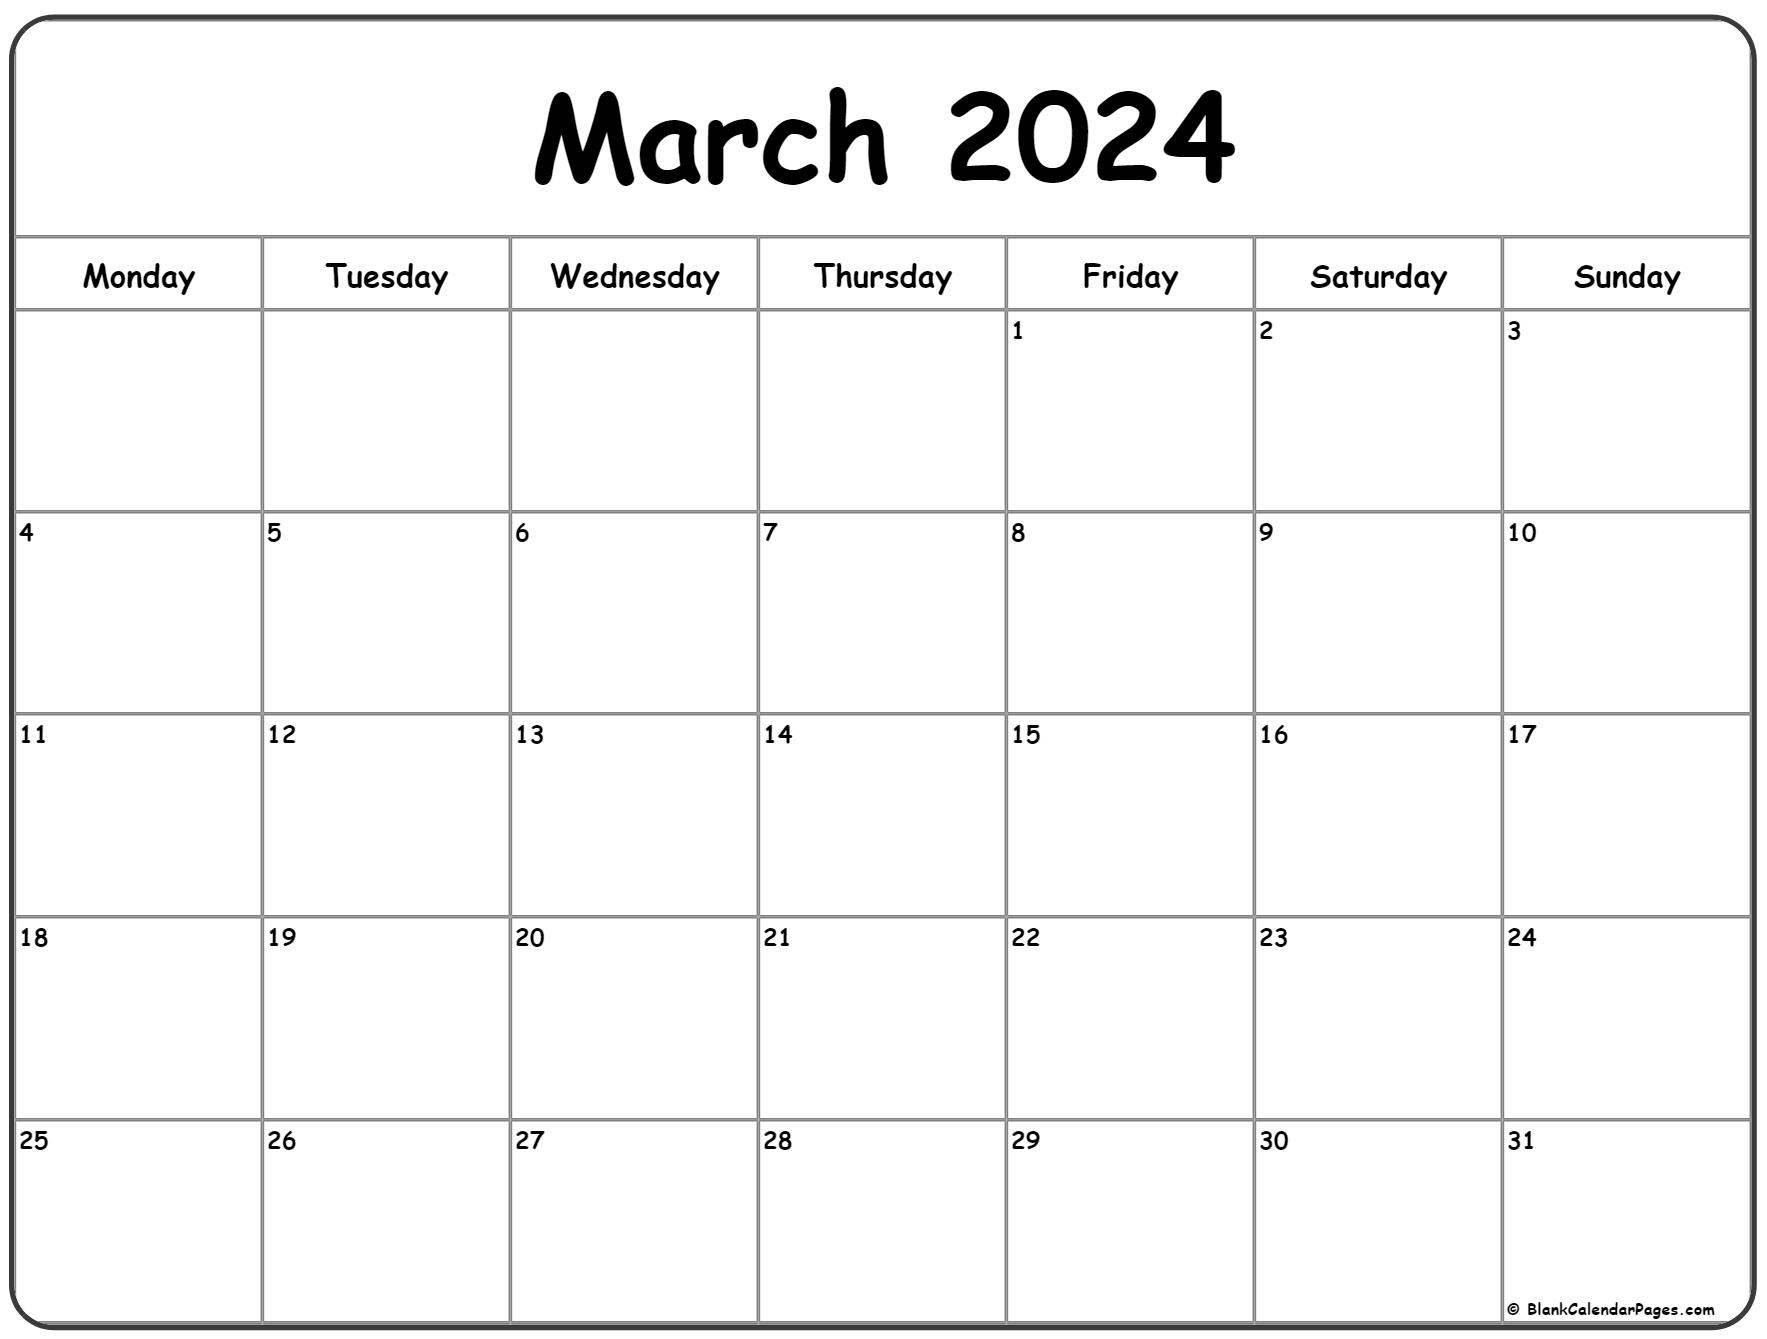 March 2024 Monday Calendar | Monday To Sunday for Calendar March 2024 Printable